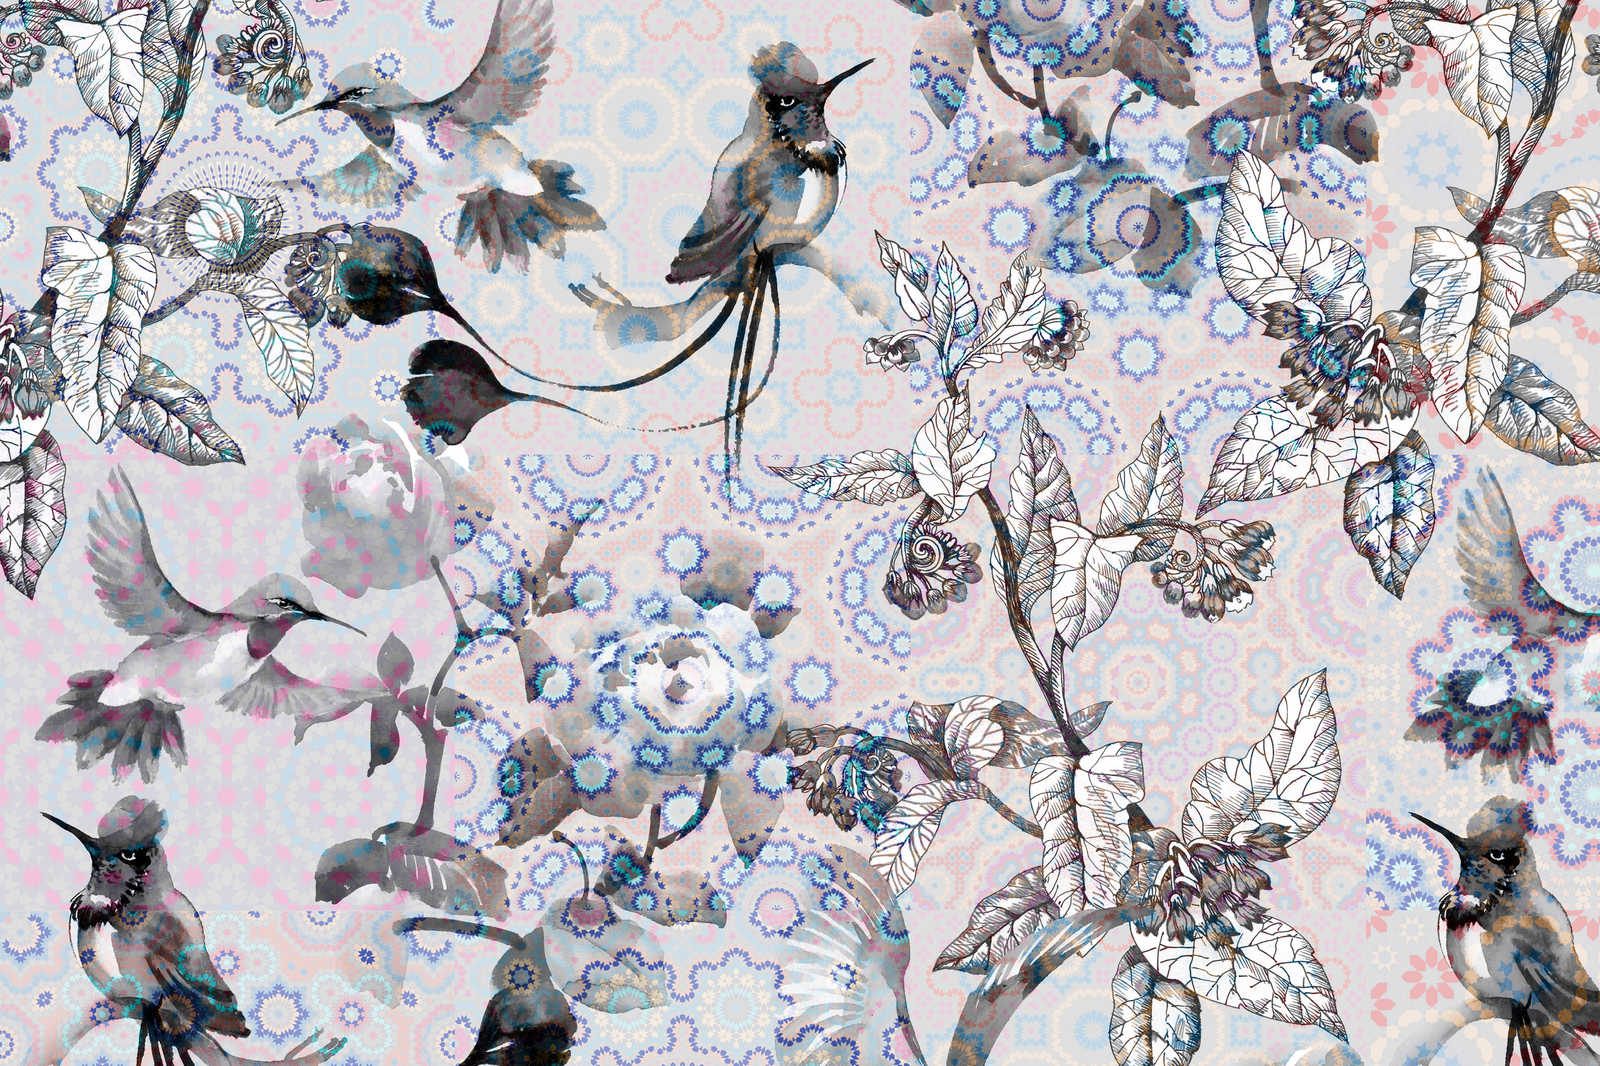             Leinwandbild Natur Design im Collage Stil | exotic mosaic 3 – 0,90 m x 0,60 m
        